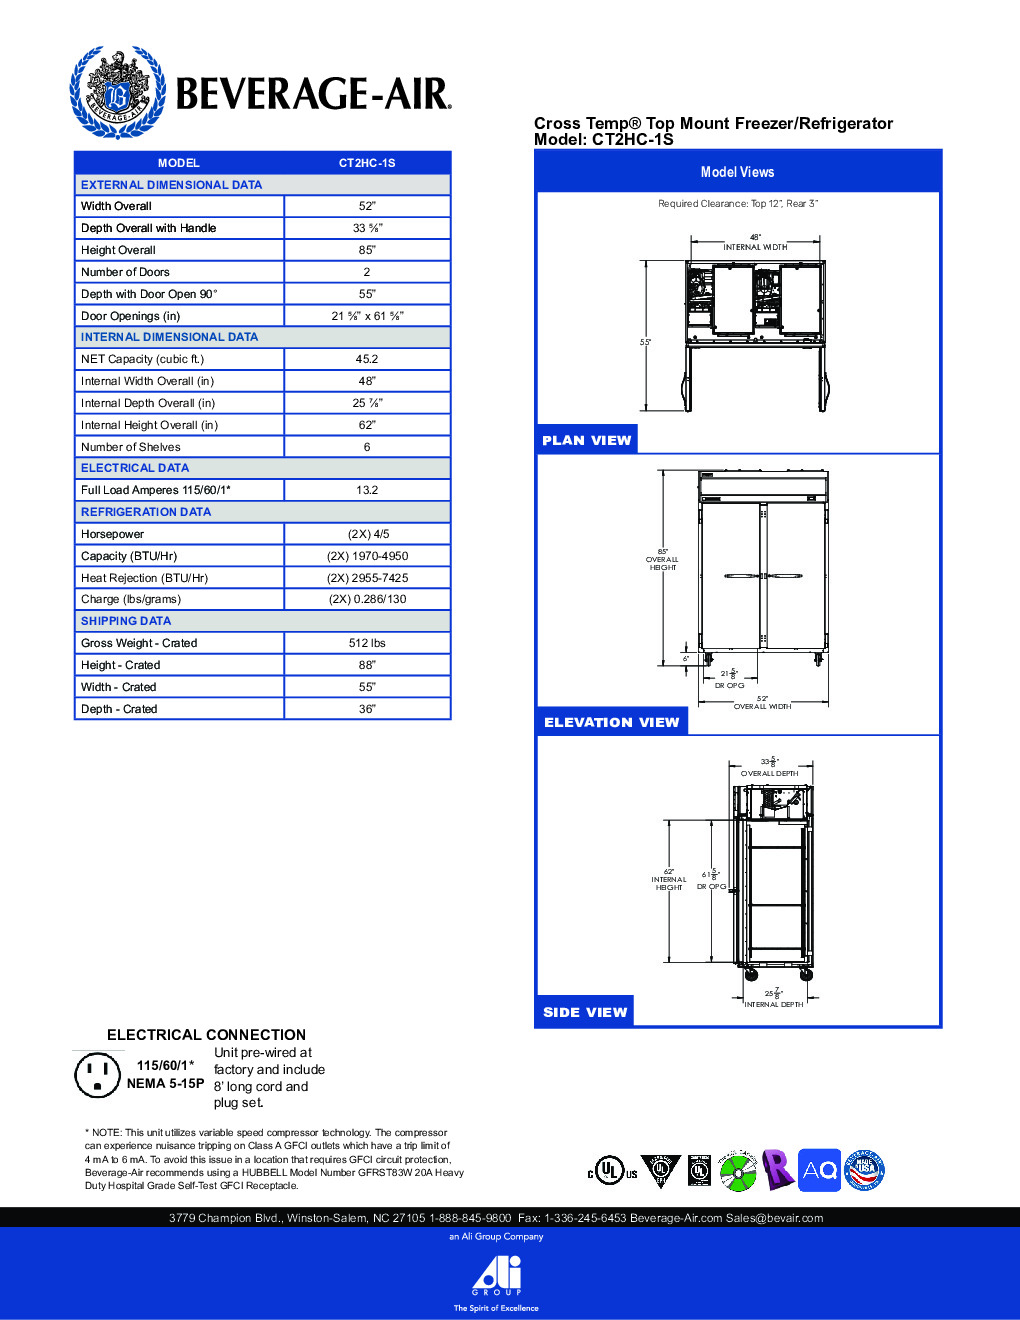 Beverage Air CT2HC-1S Convertible Refrigerator Freezer w/ 45.2 Cu.Ft. Capacity, 2 Solid Doors